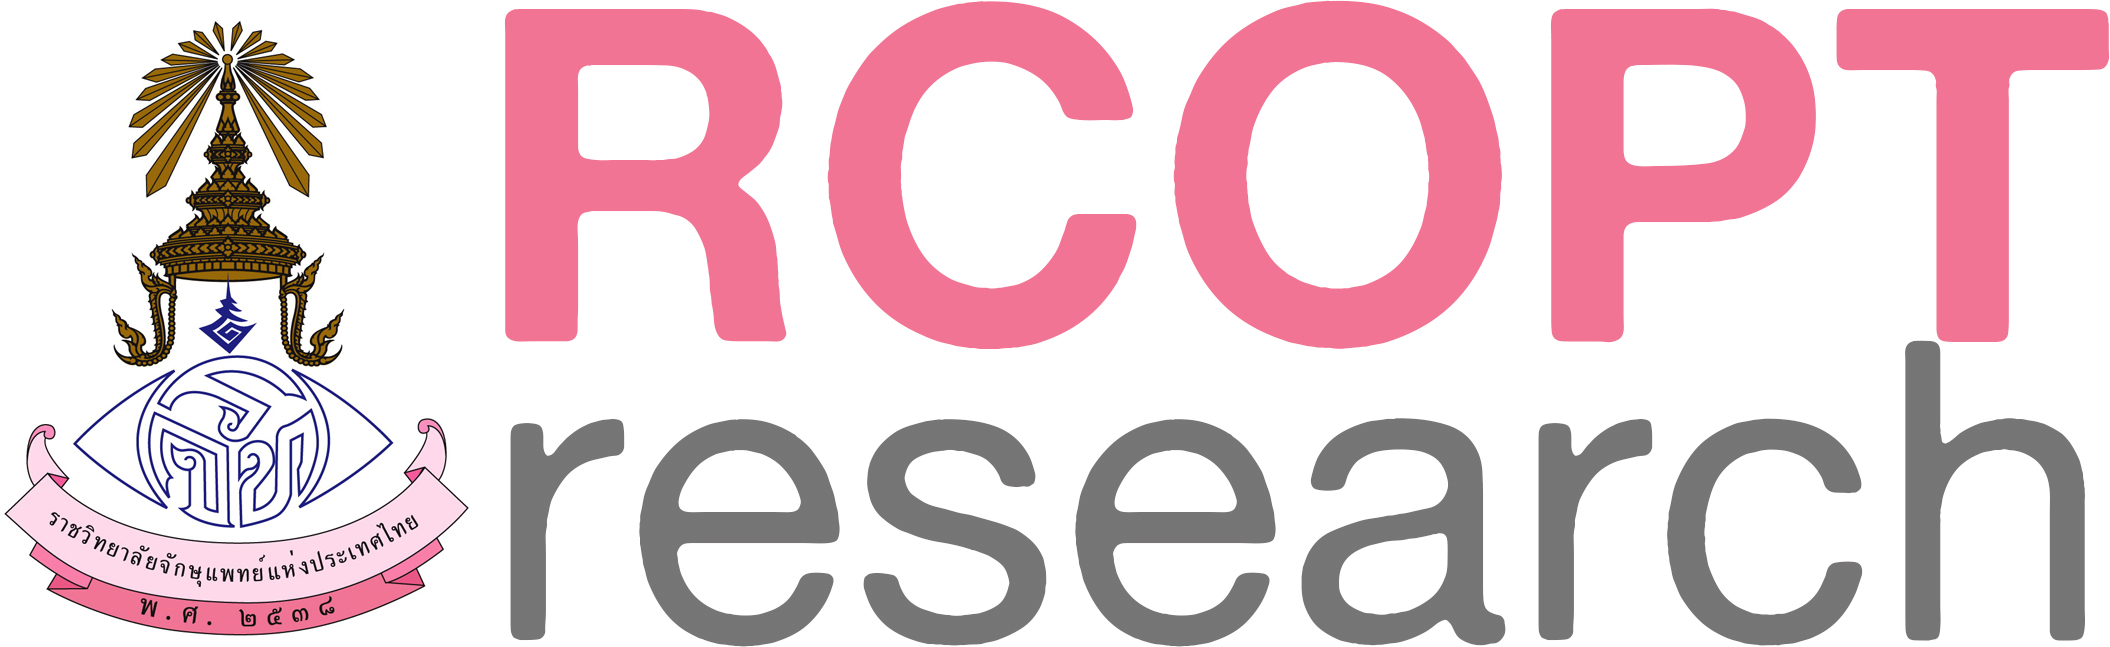 1825RCOPT research logo1.jpg